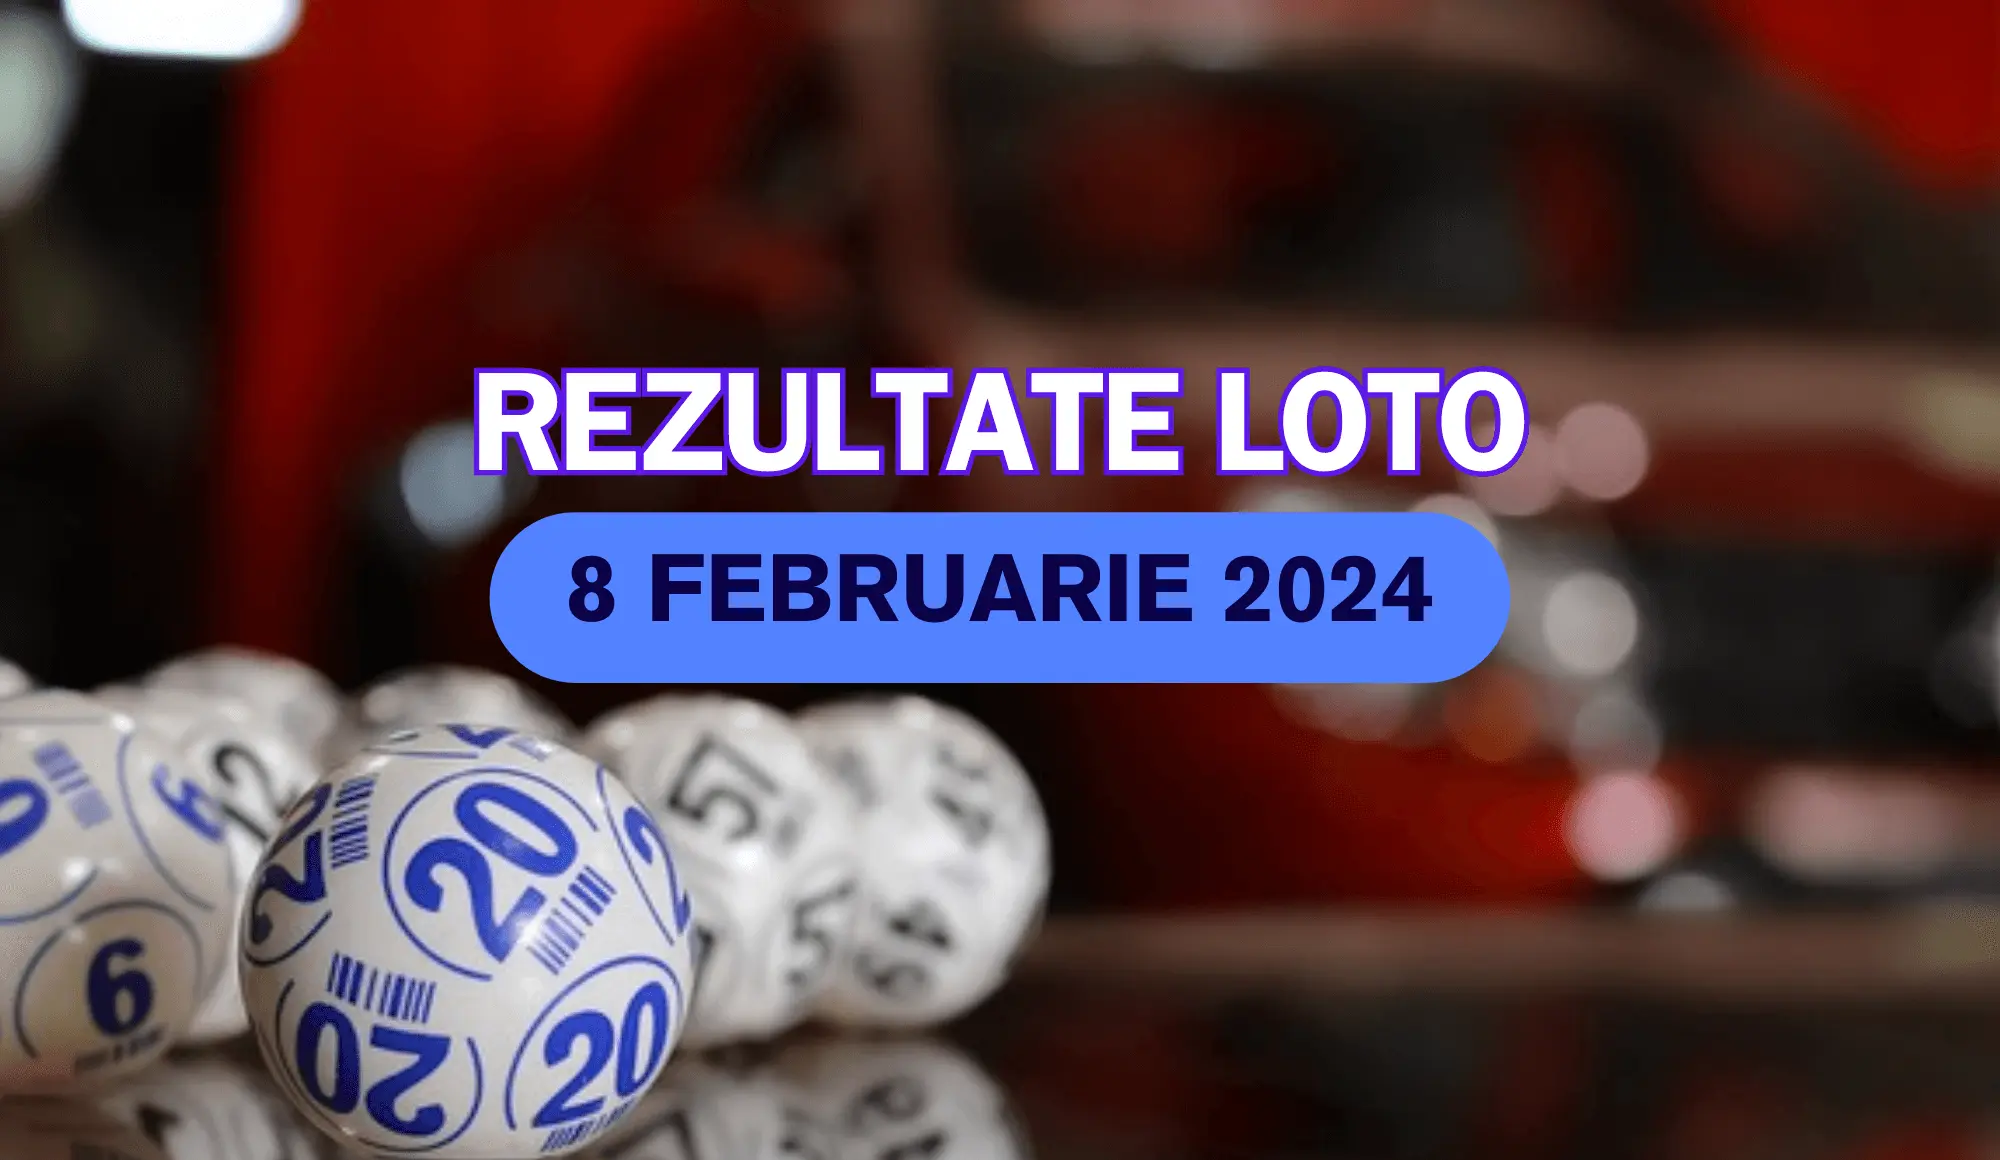 Rezultate Loto 8 februarie 2024 – Loto 6/49, Loto 5/40, Joker și Noroc